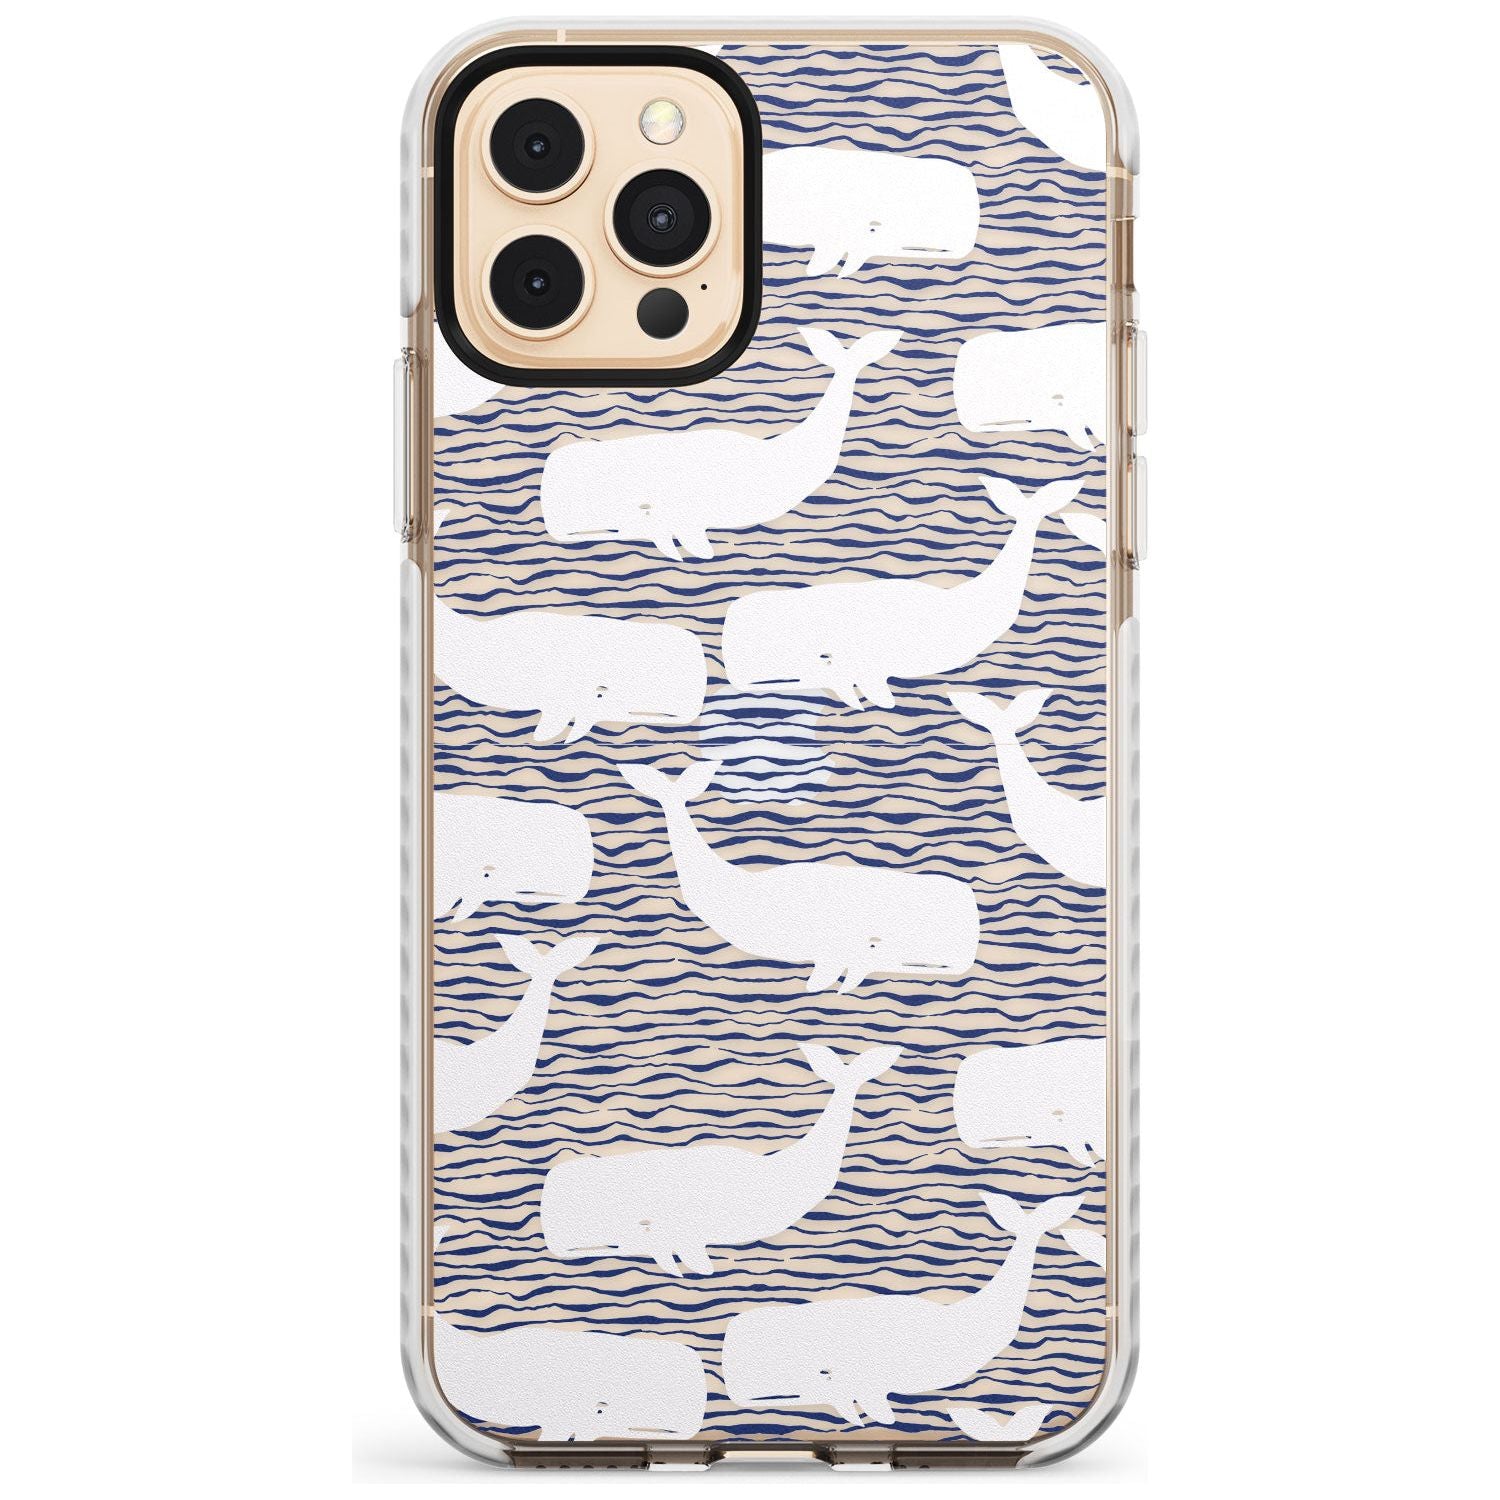 Cute Whales (Transparent) Slim TPU Phone Case for iPhone 11 Pro Max